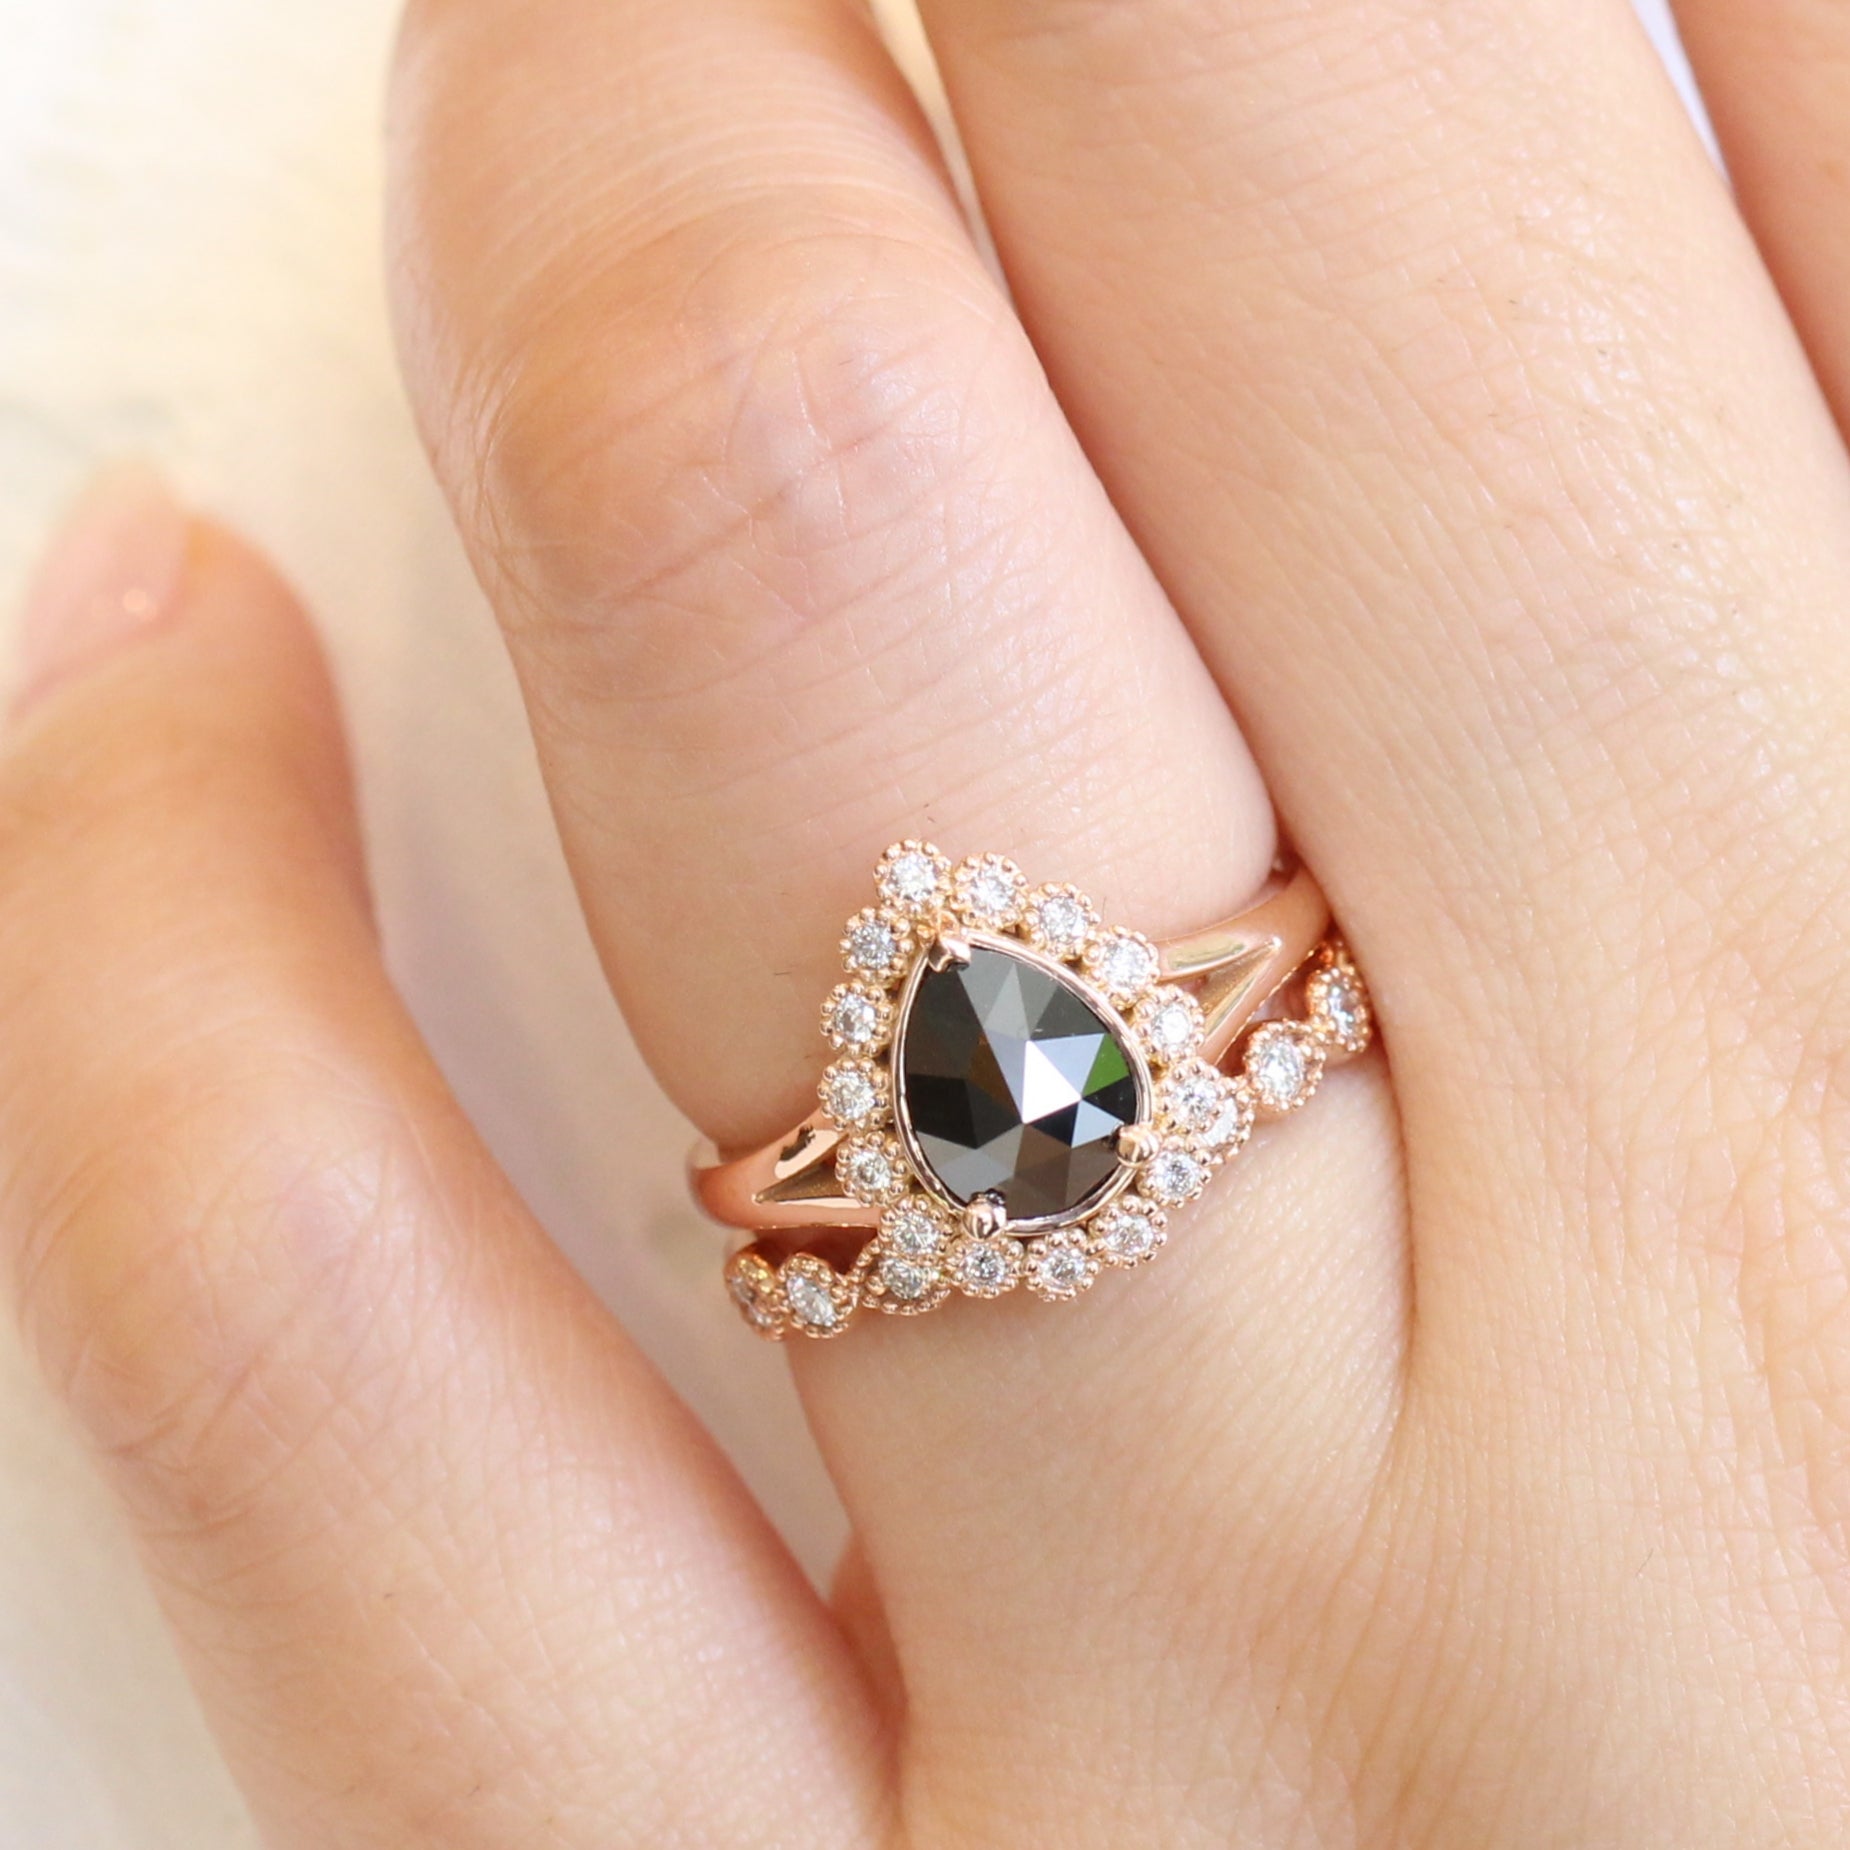 Vintage Luna Halo Black Diamond Ring w/ Pear Diamond and Matching Wedding Band